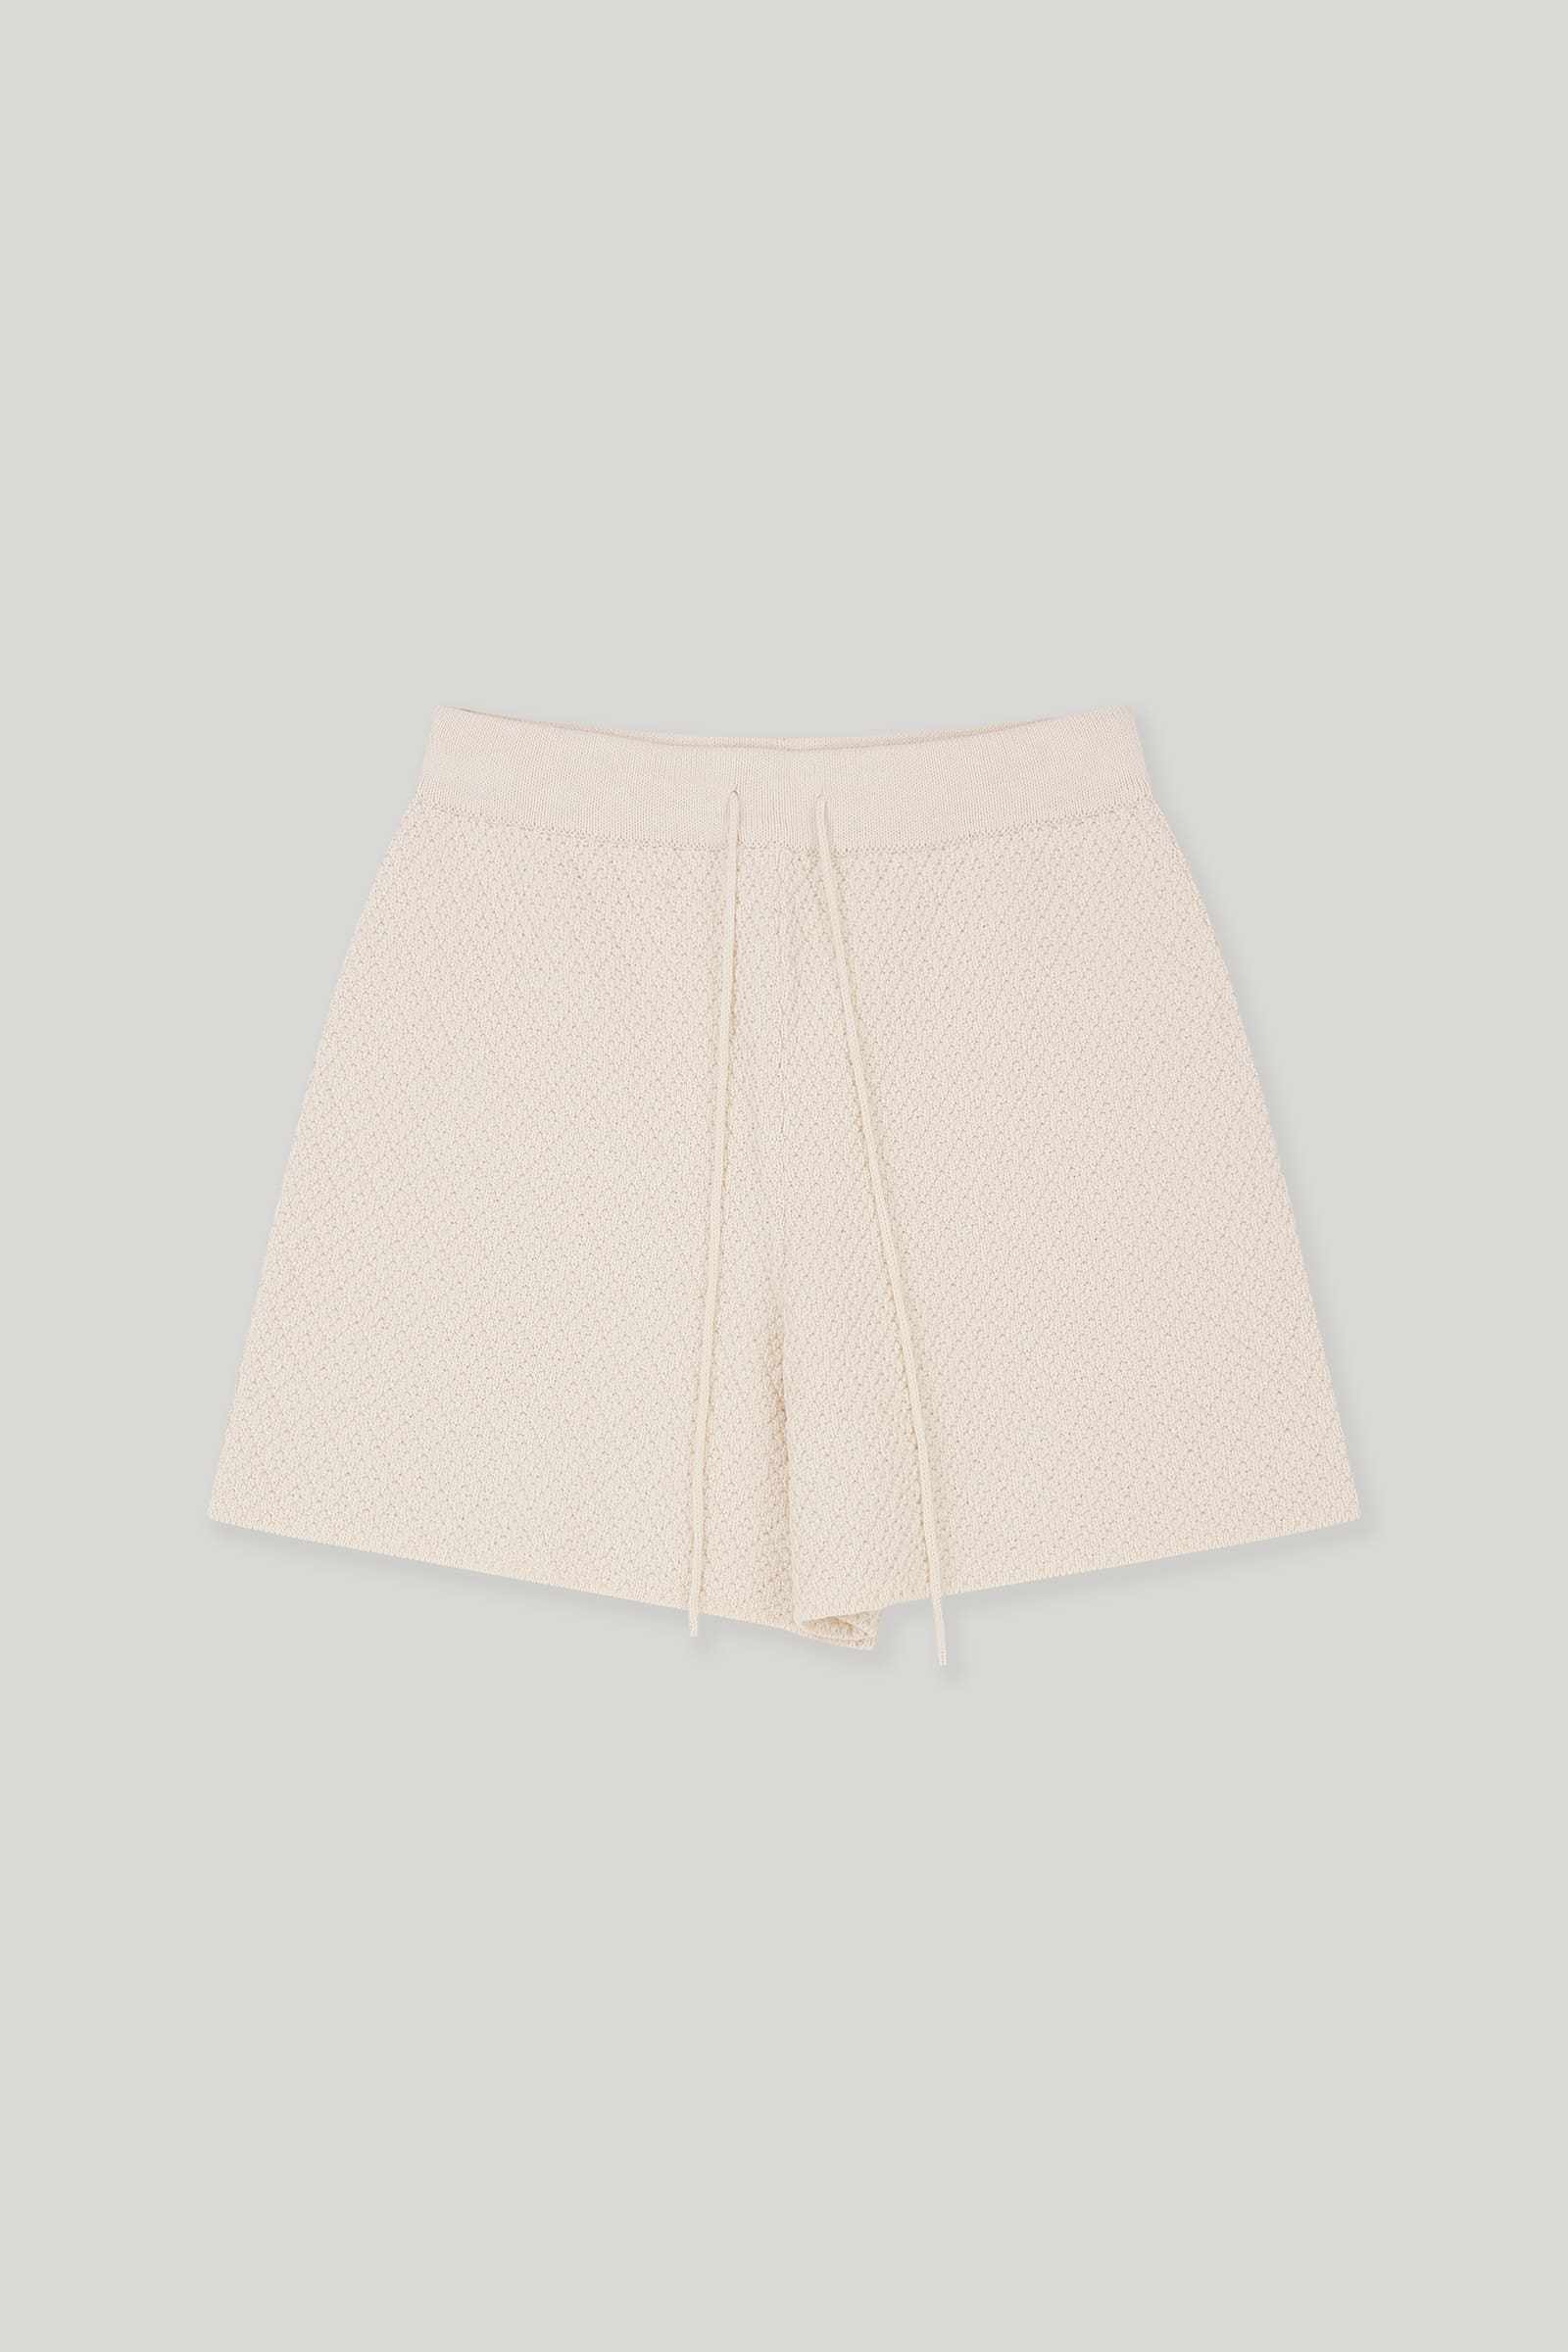 Loren Knit Shorts